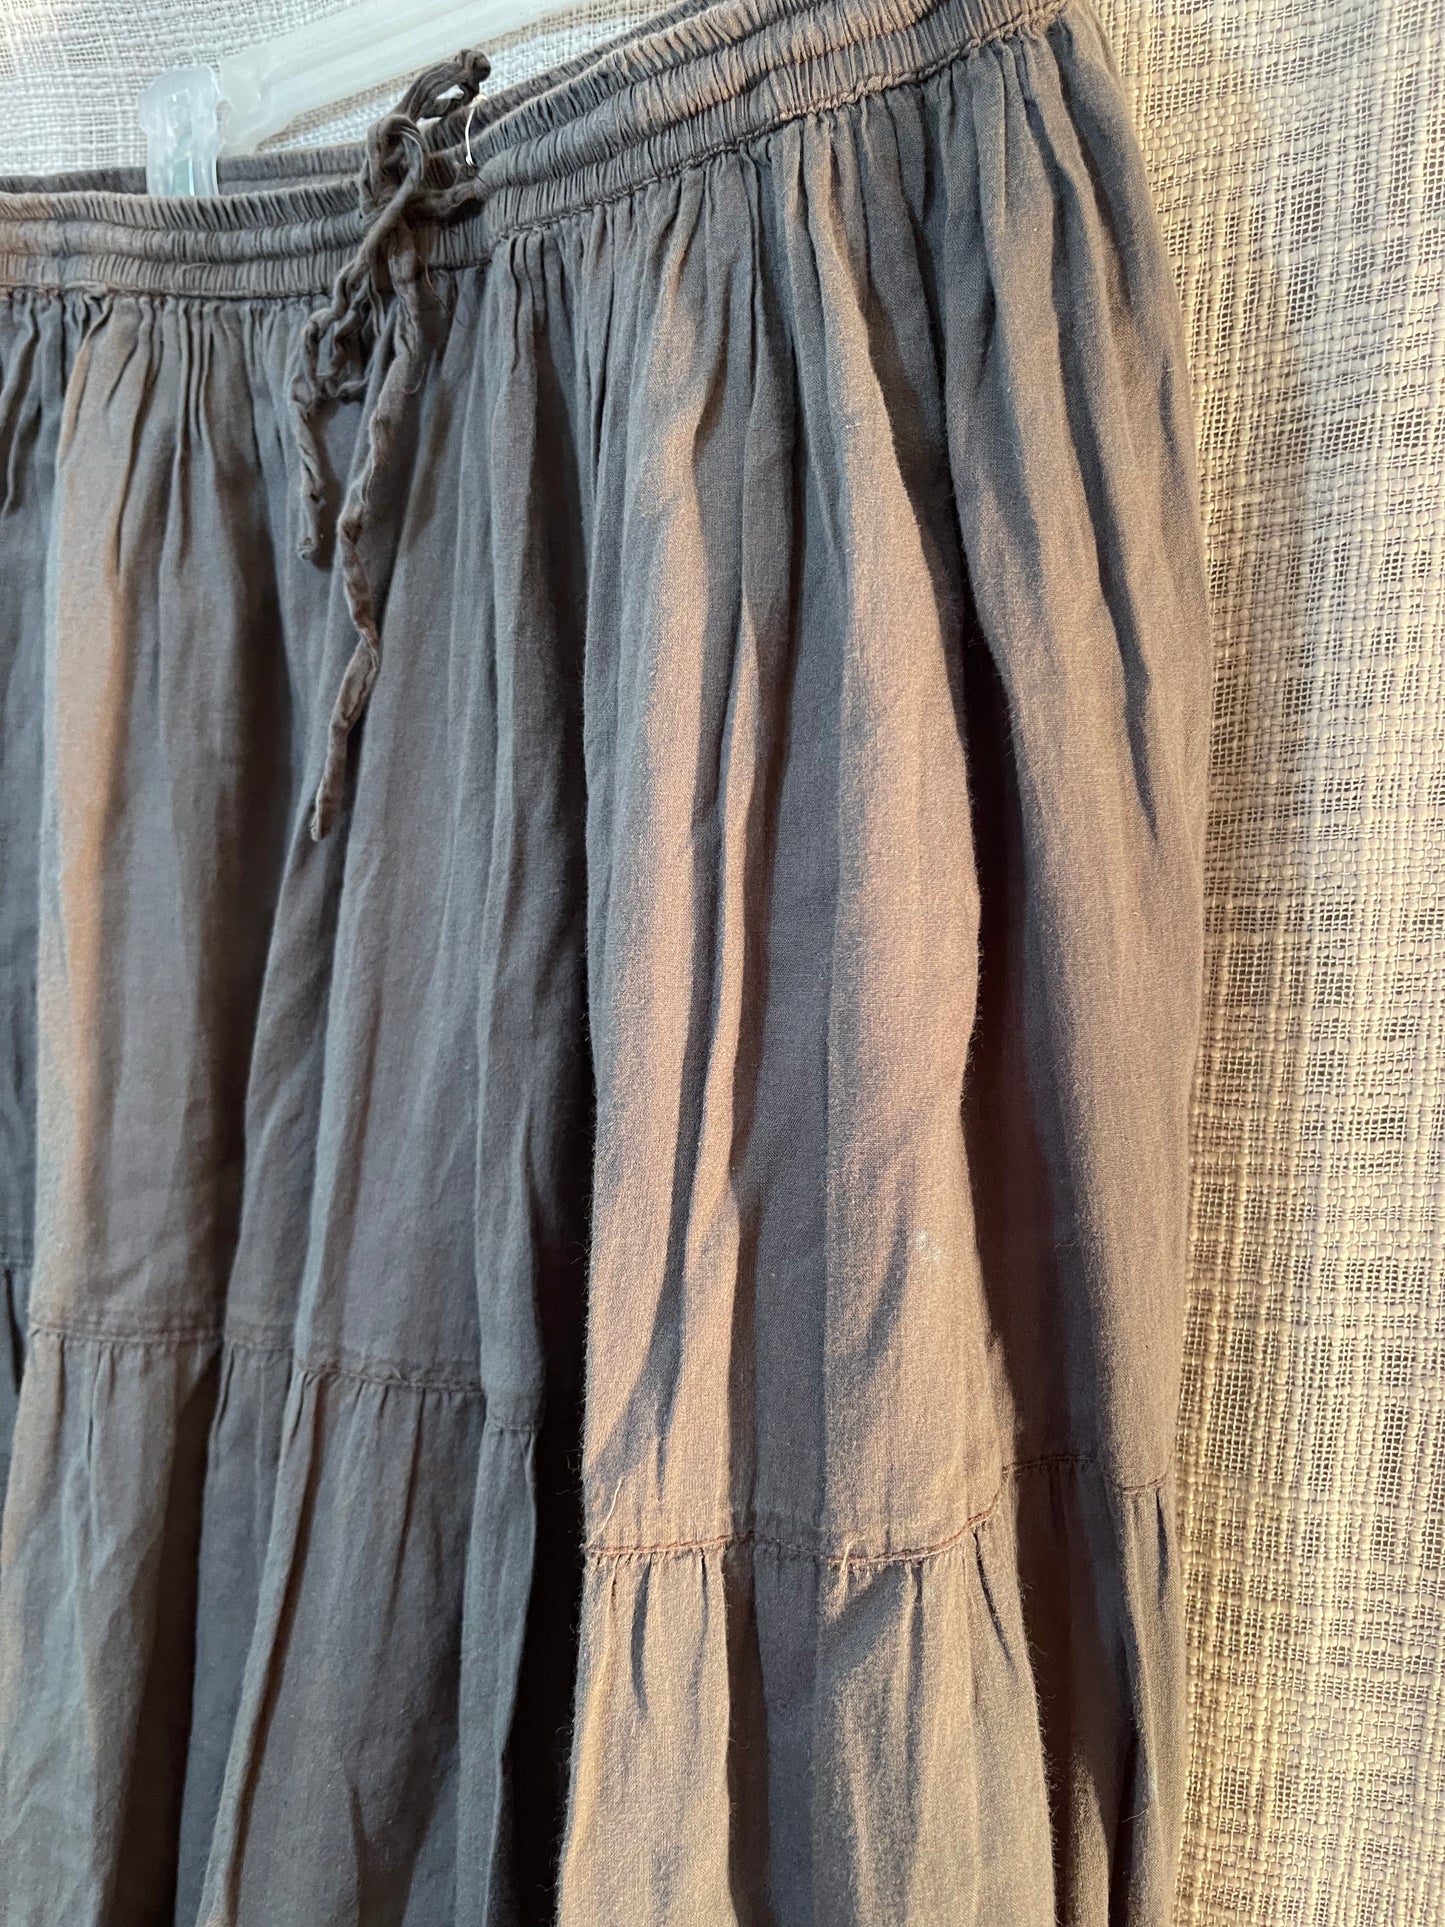 Prairie skirt, tiered bohemian skirt, flowy midi skirt